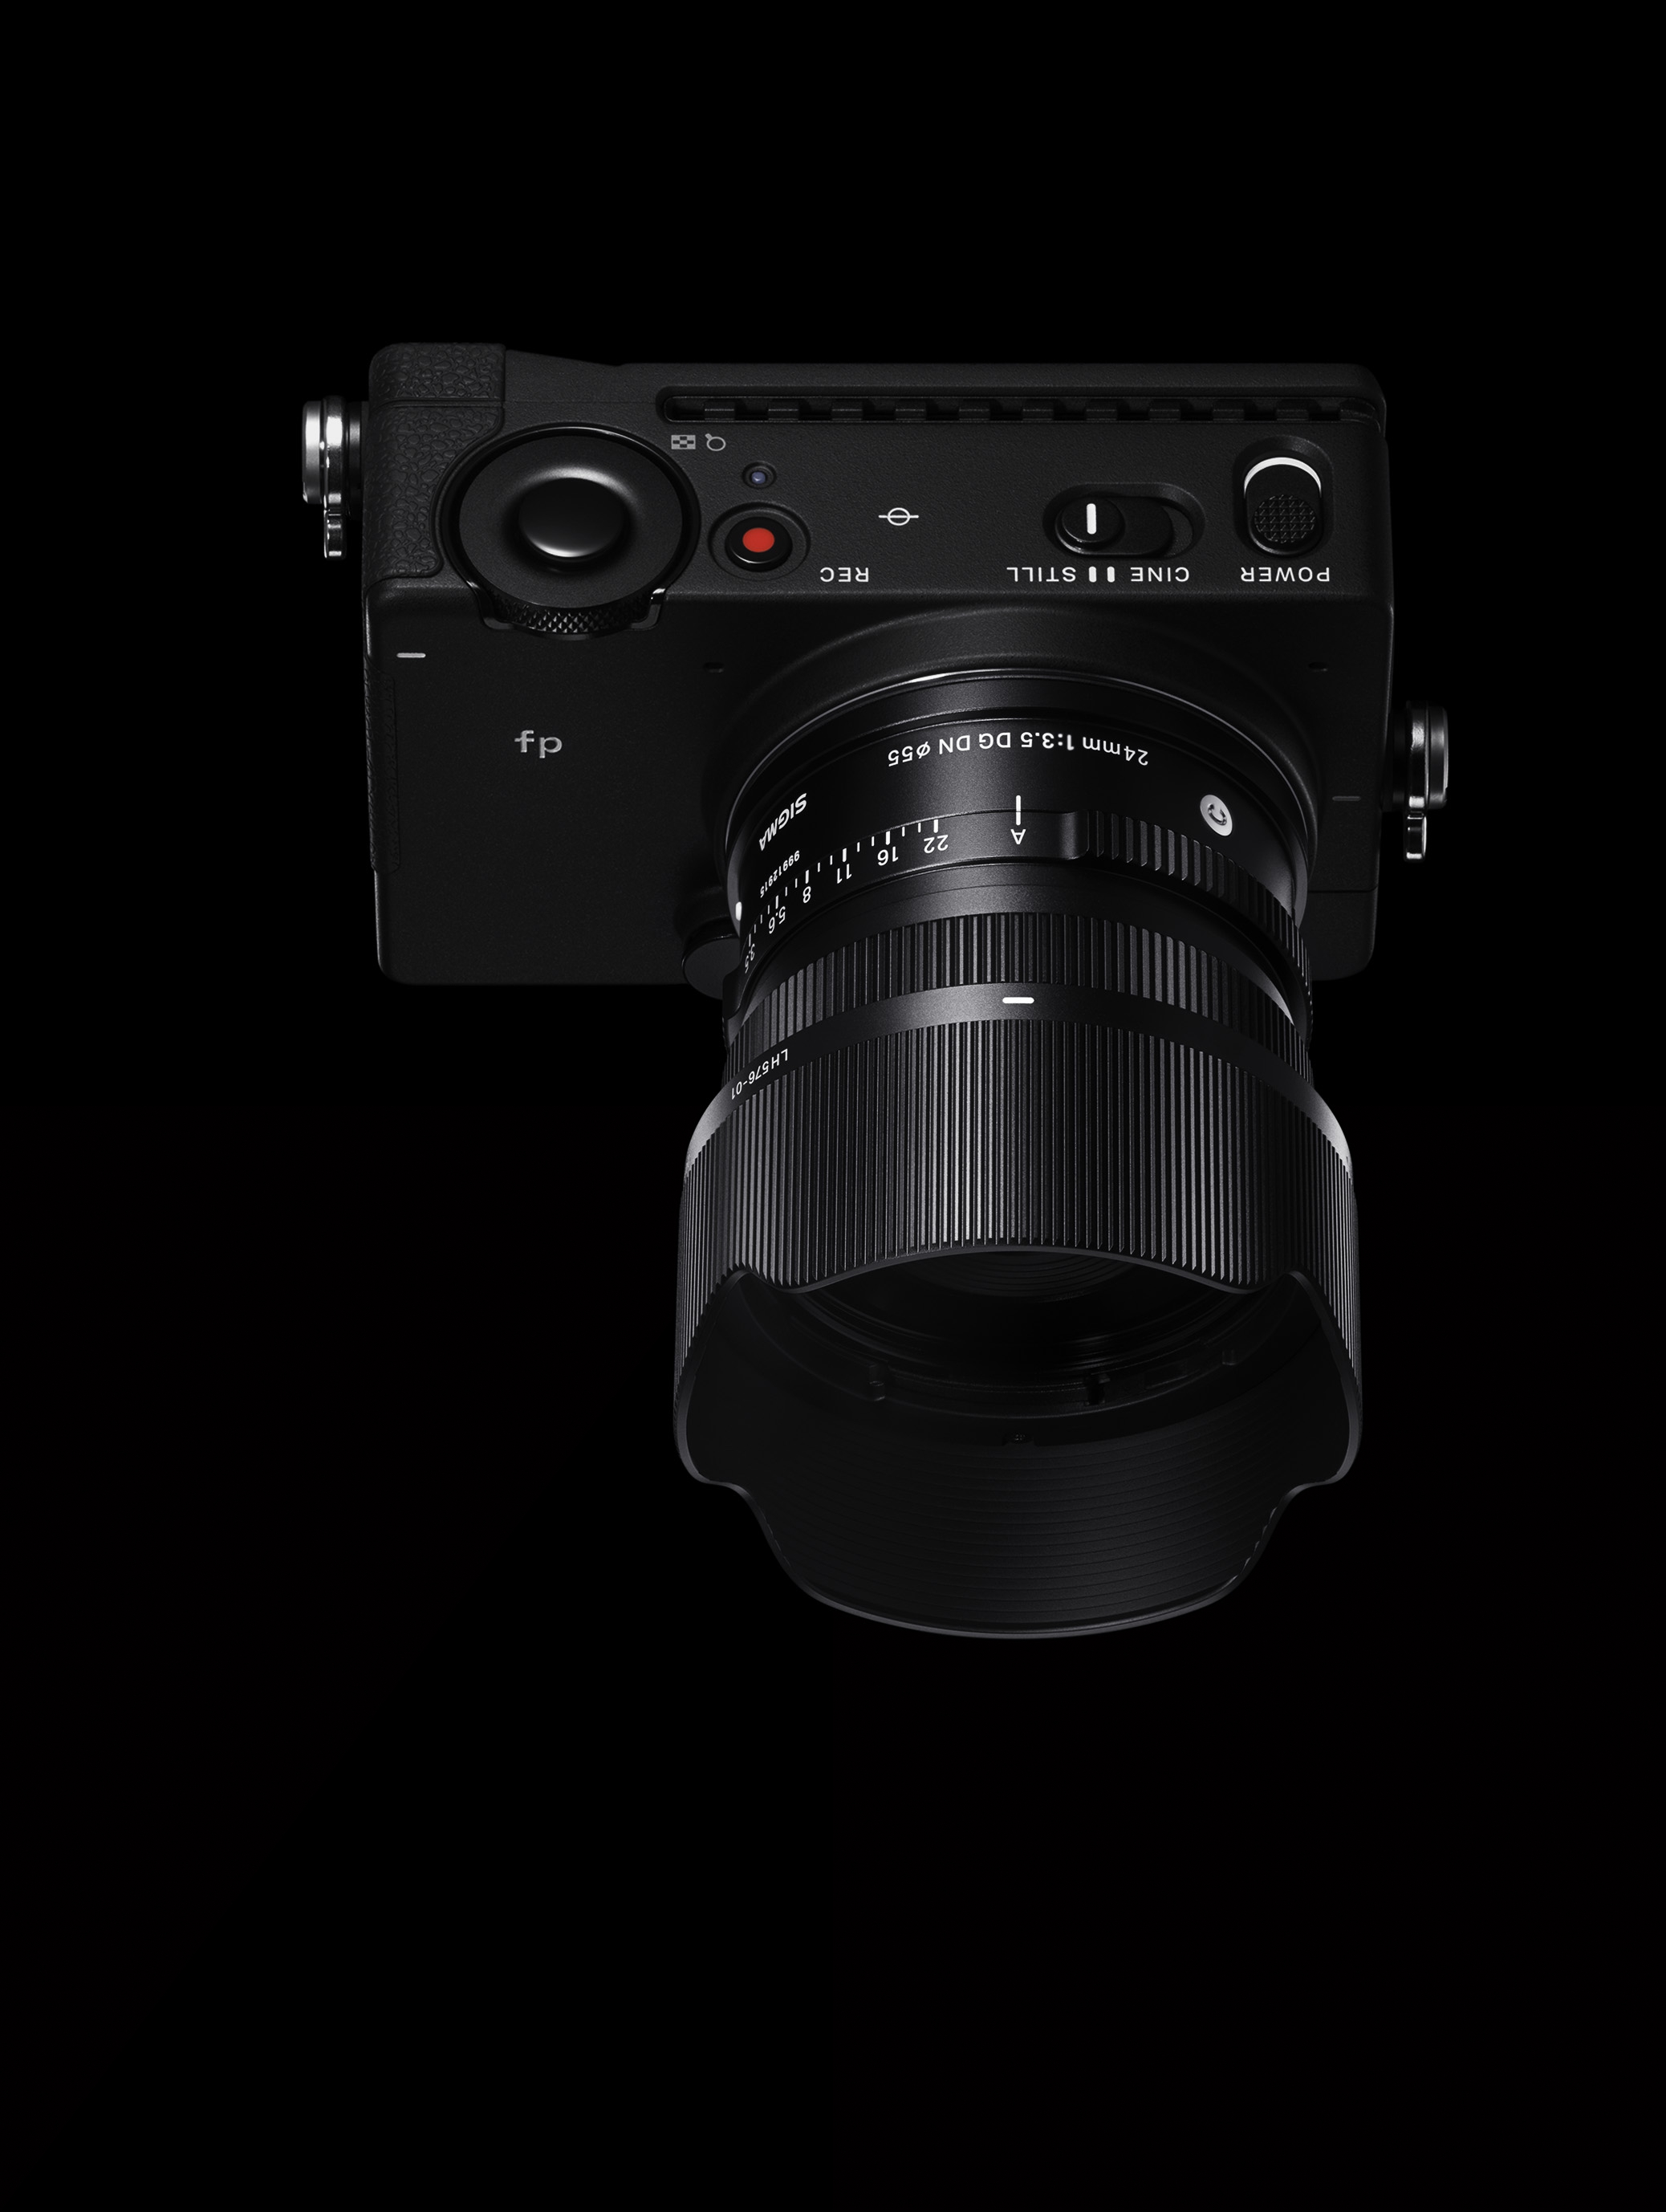 Sigma 24 mm f/1.4 Sony-E